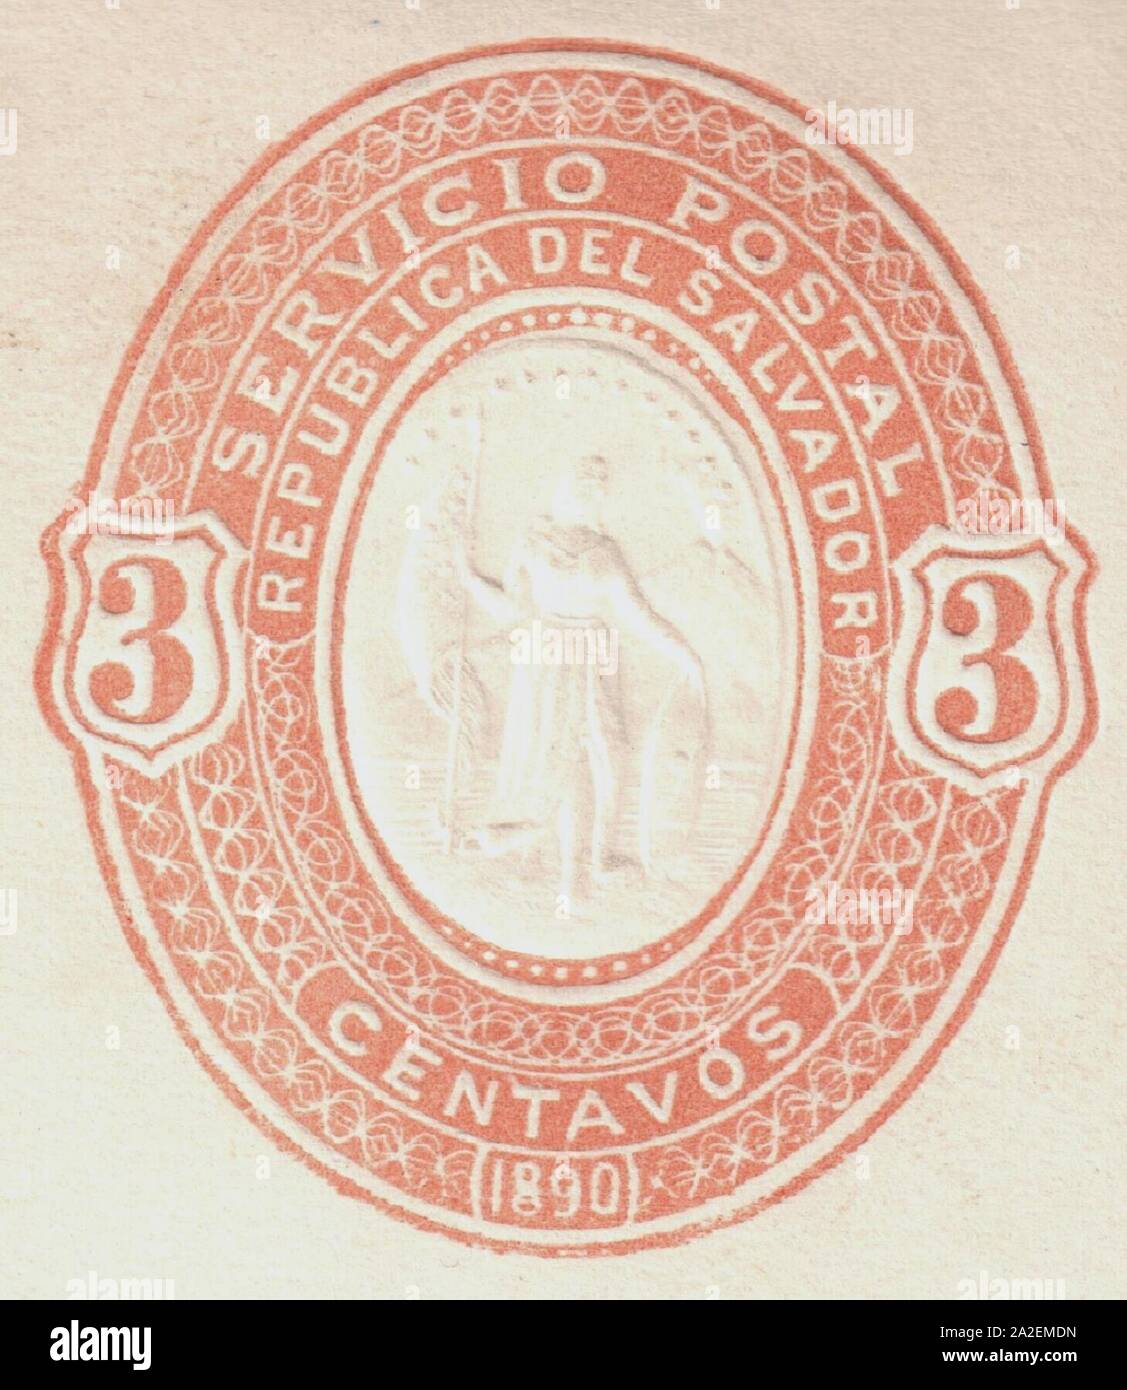 El Salvador 1890 3c wrapper imprinted stamp. Stock Photo